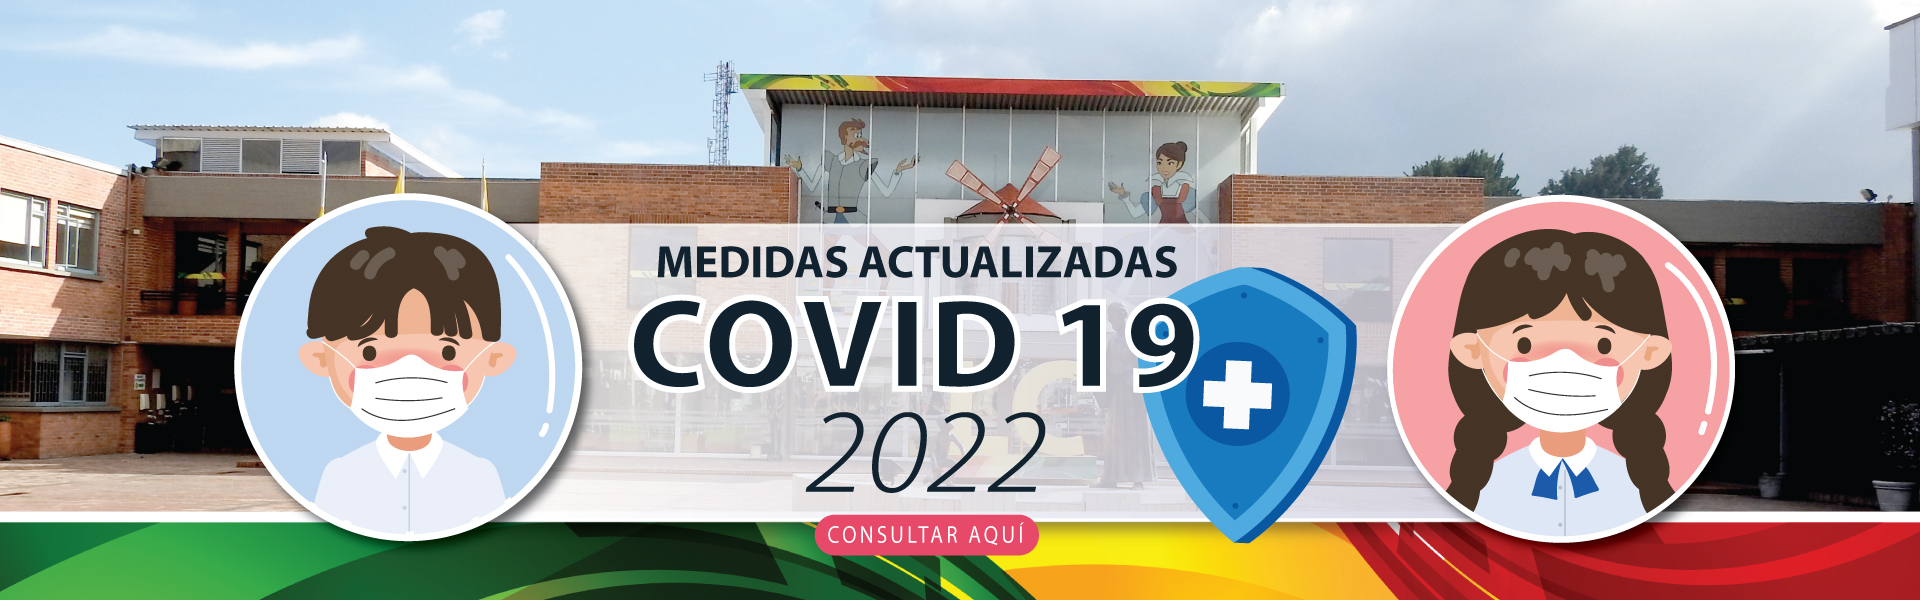 banner edidas covid 2022 01